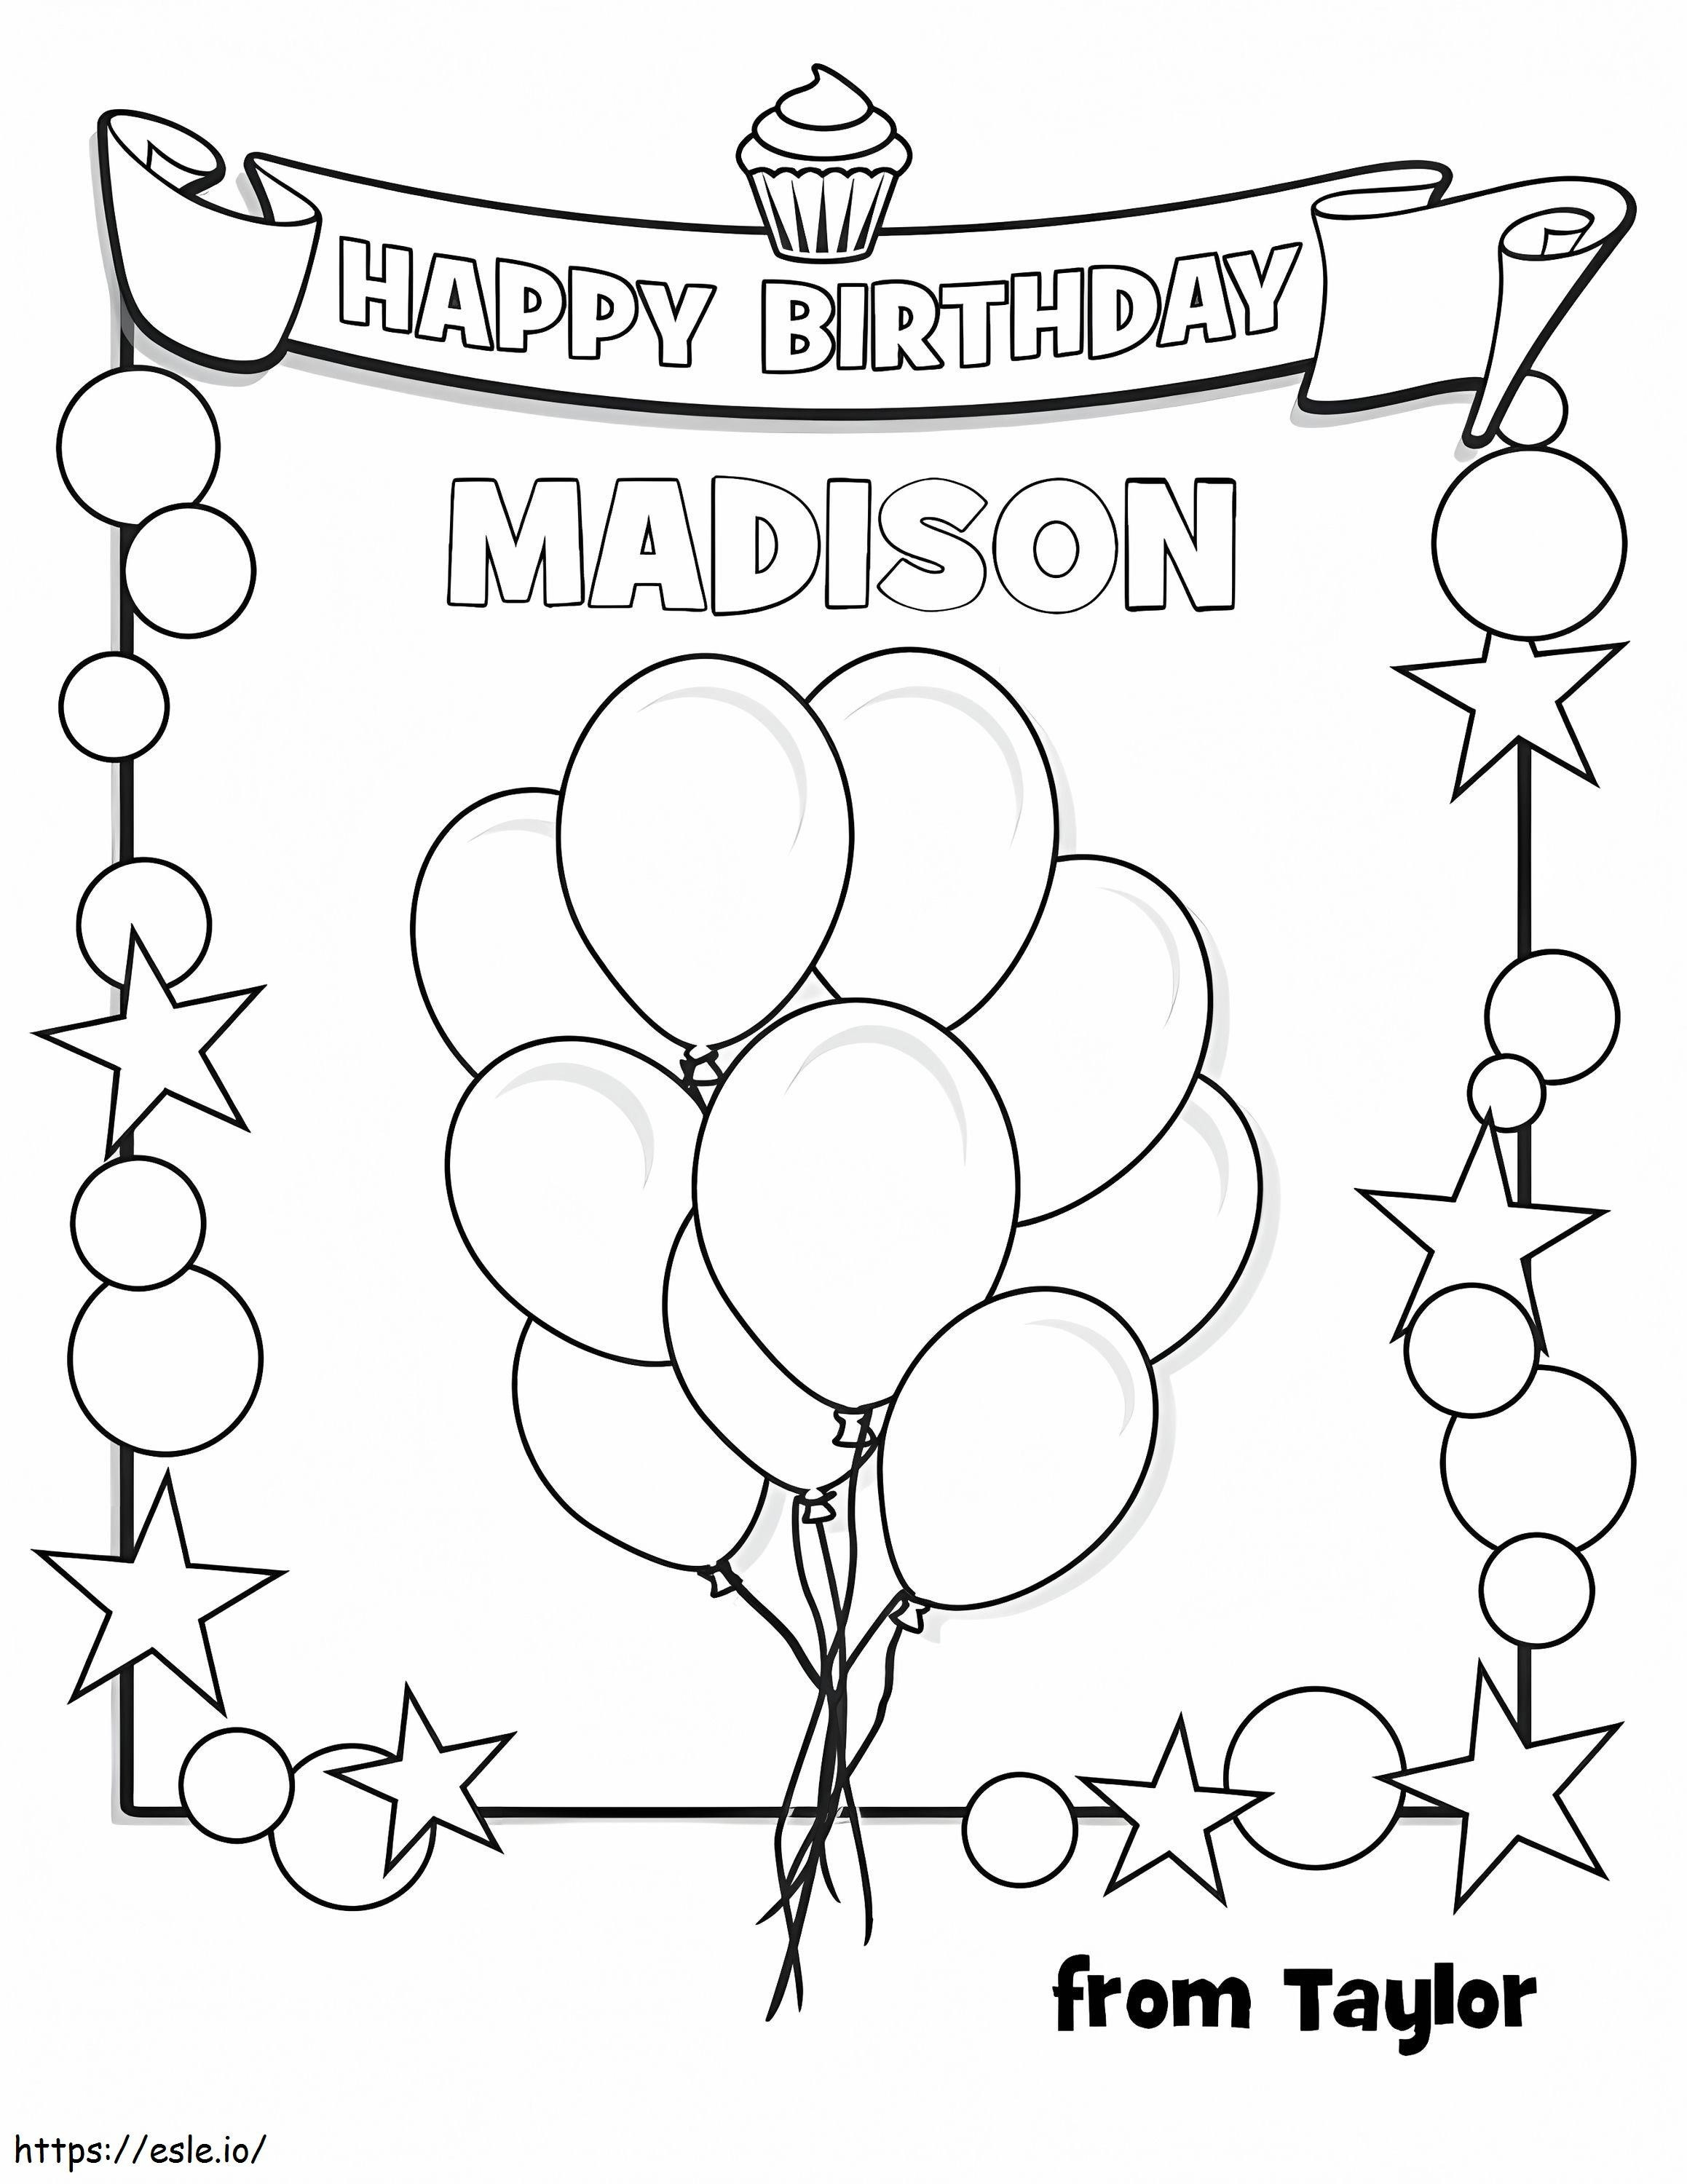 8Zszxl75B7Cqwh42Lqnbadr5Fw 00001 1 Balloons Birthday To Print Free Printable 672X870 1 coloring page